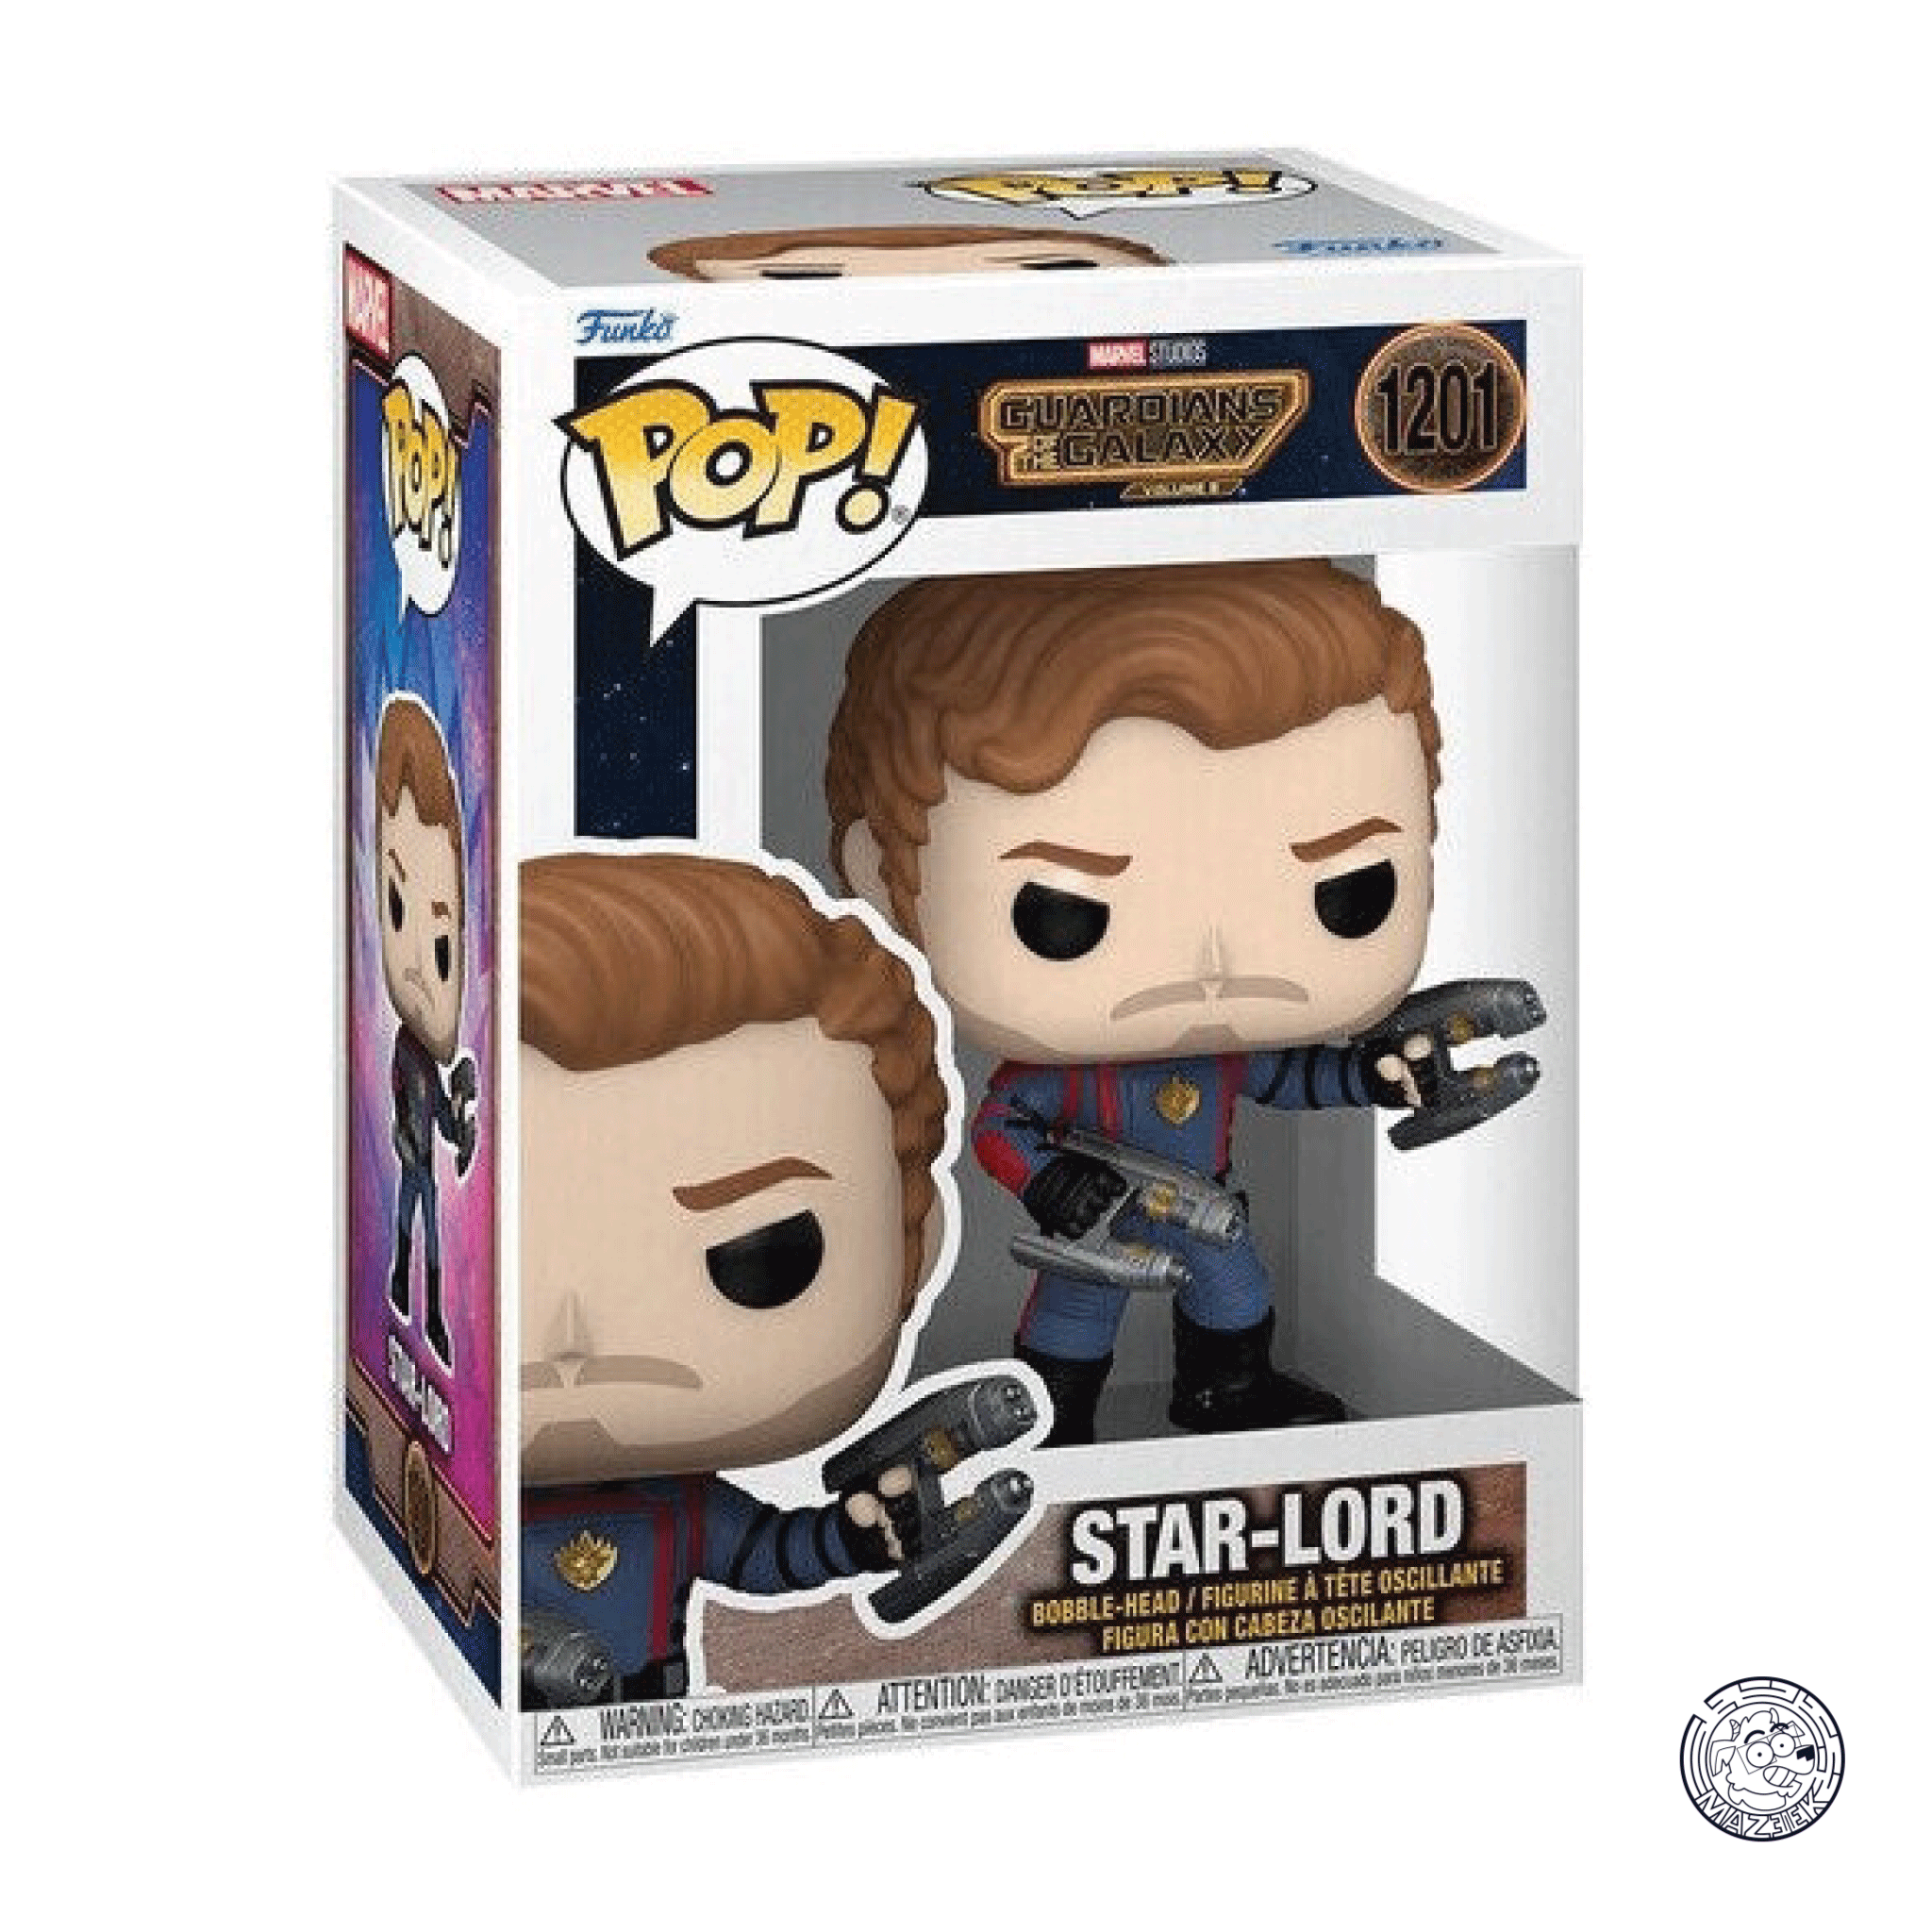 Funko POP! Marvel Guardians of the Galaxy: Star-Lord 1201